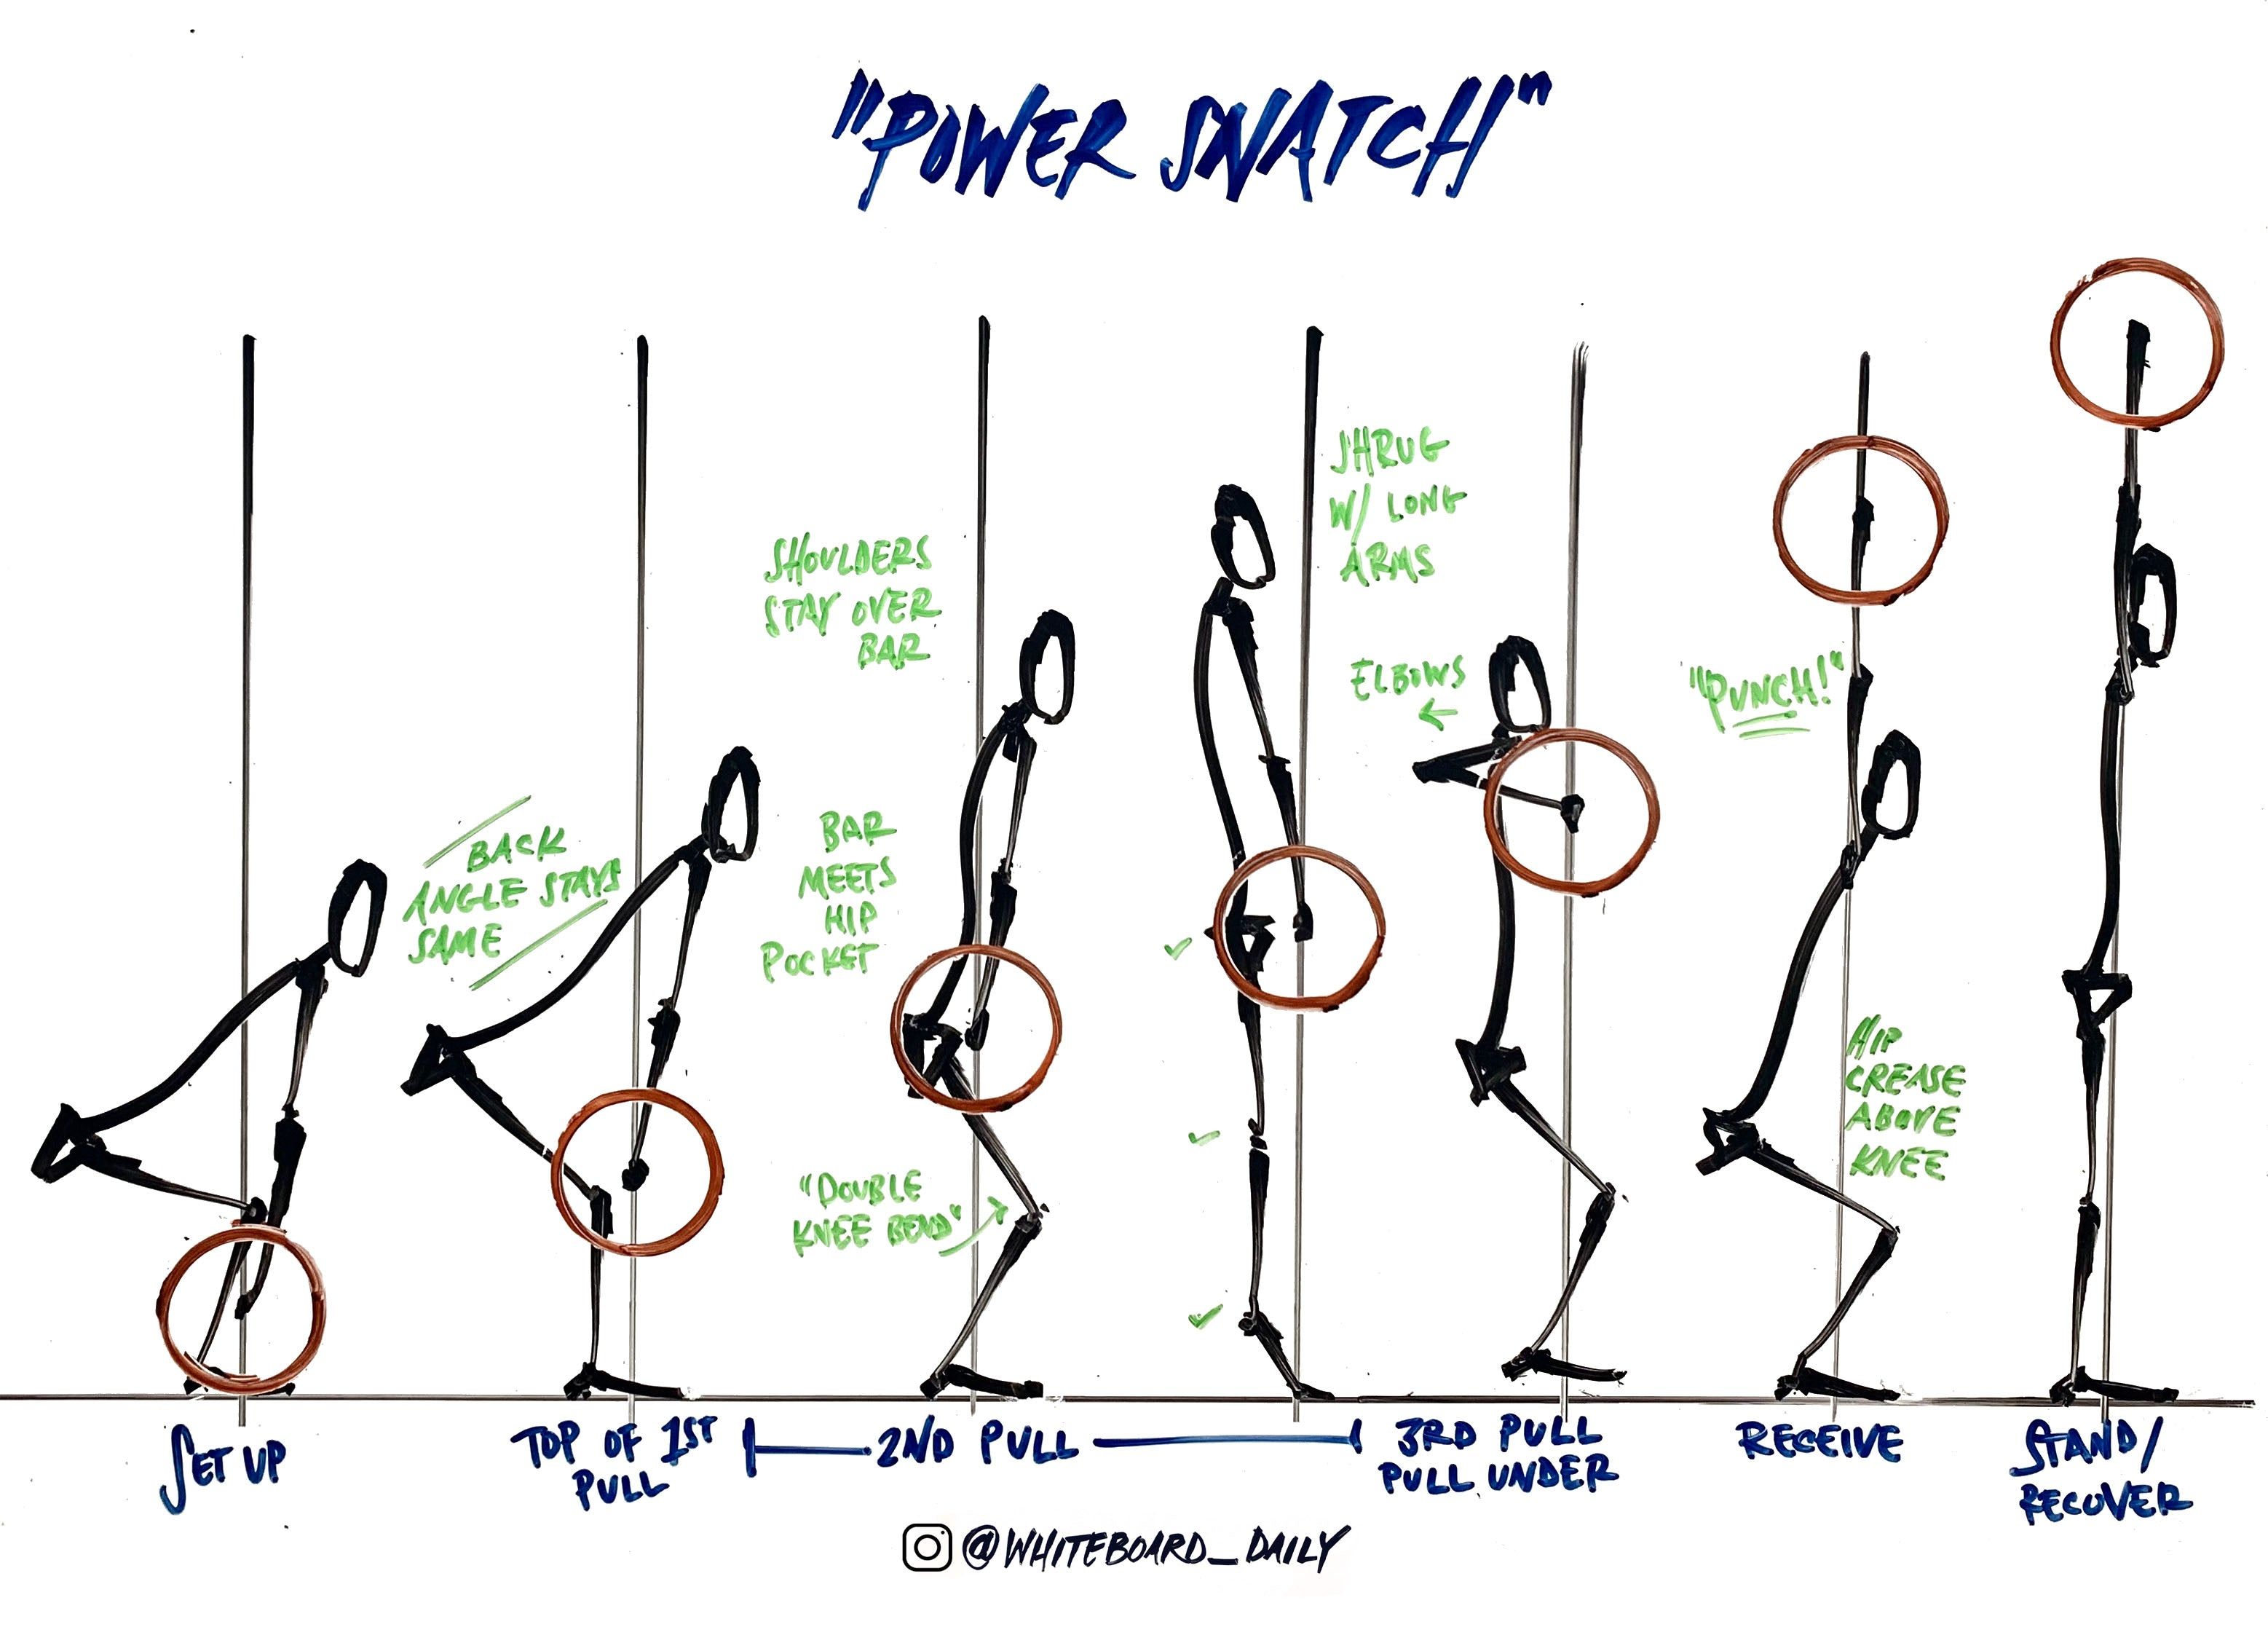 Digital Sketch: Power Snatch